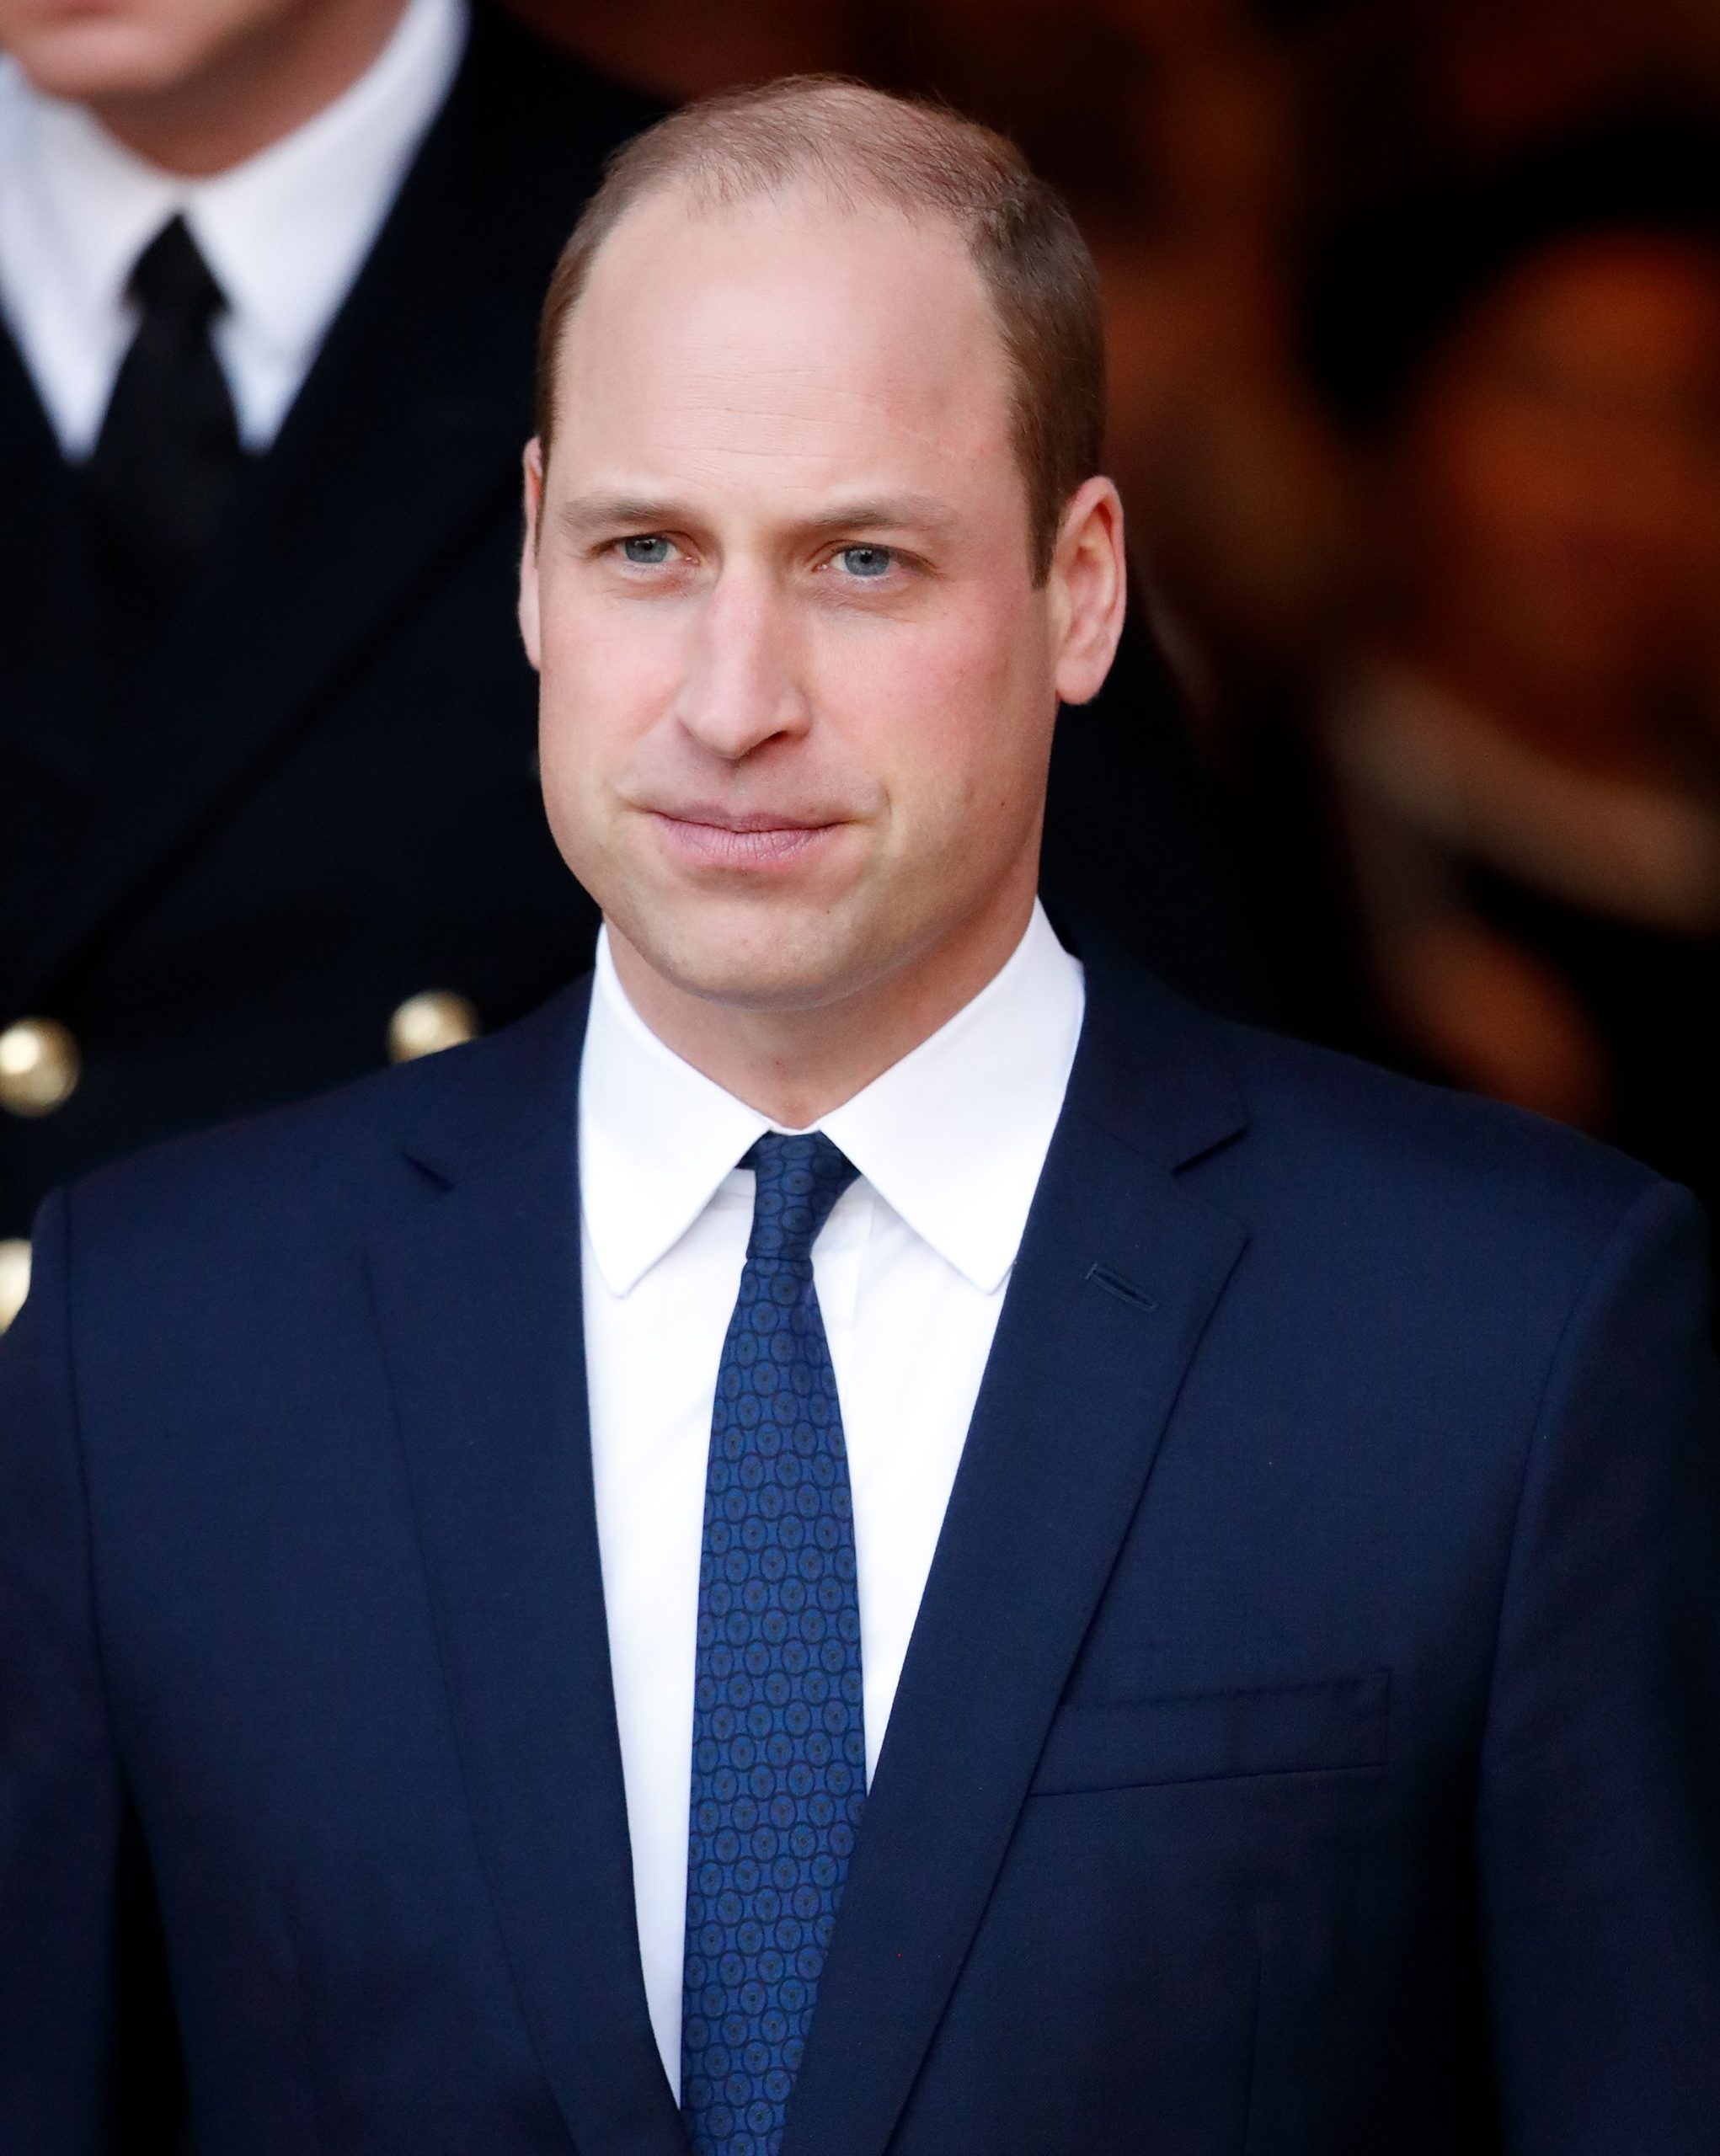 Princi i Britanisë William u infektua me Covid-19 në prill